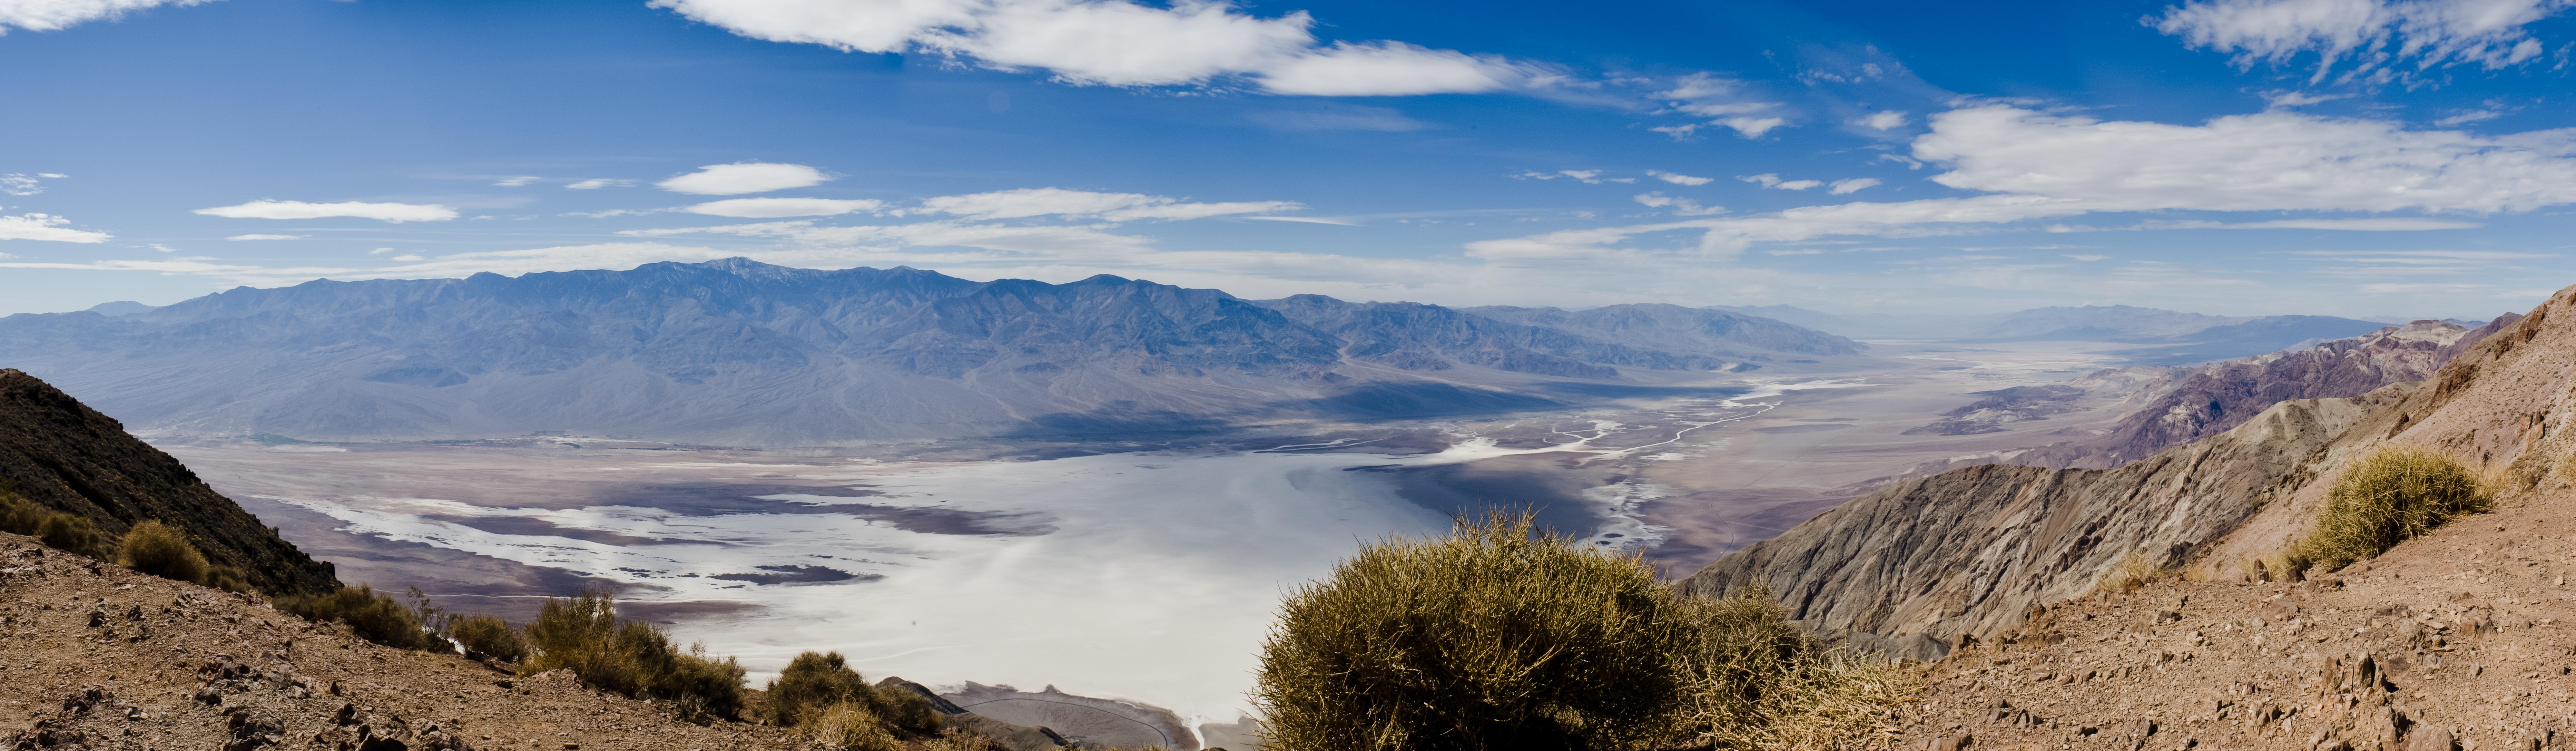 Death Valley National Park (U.S. National Park Service)